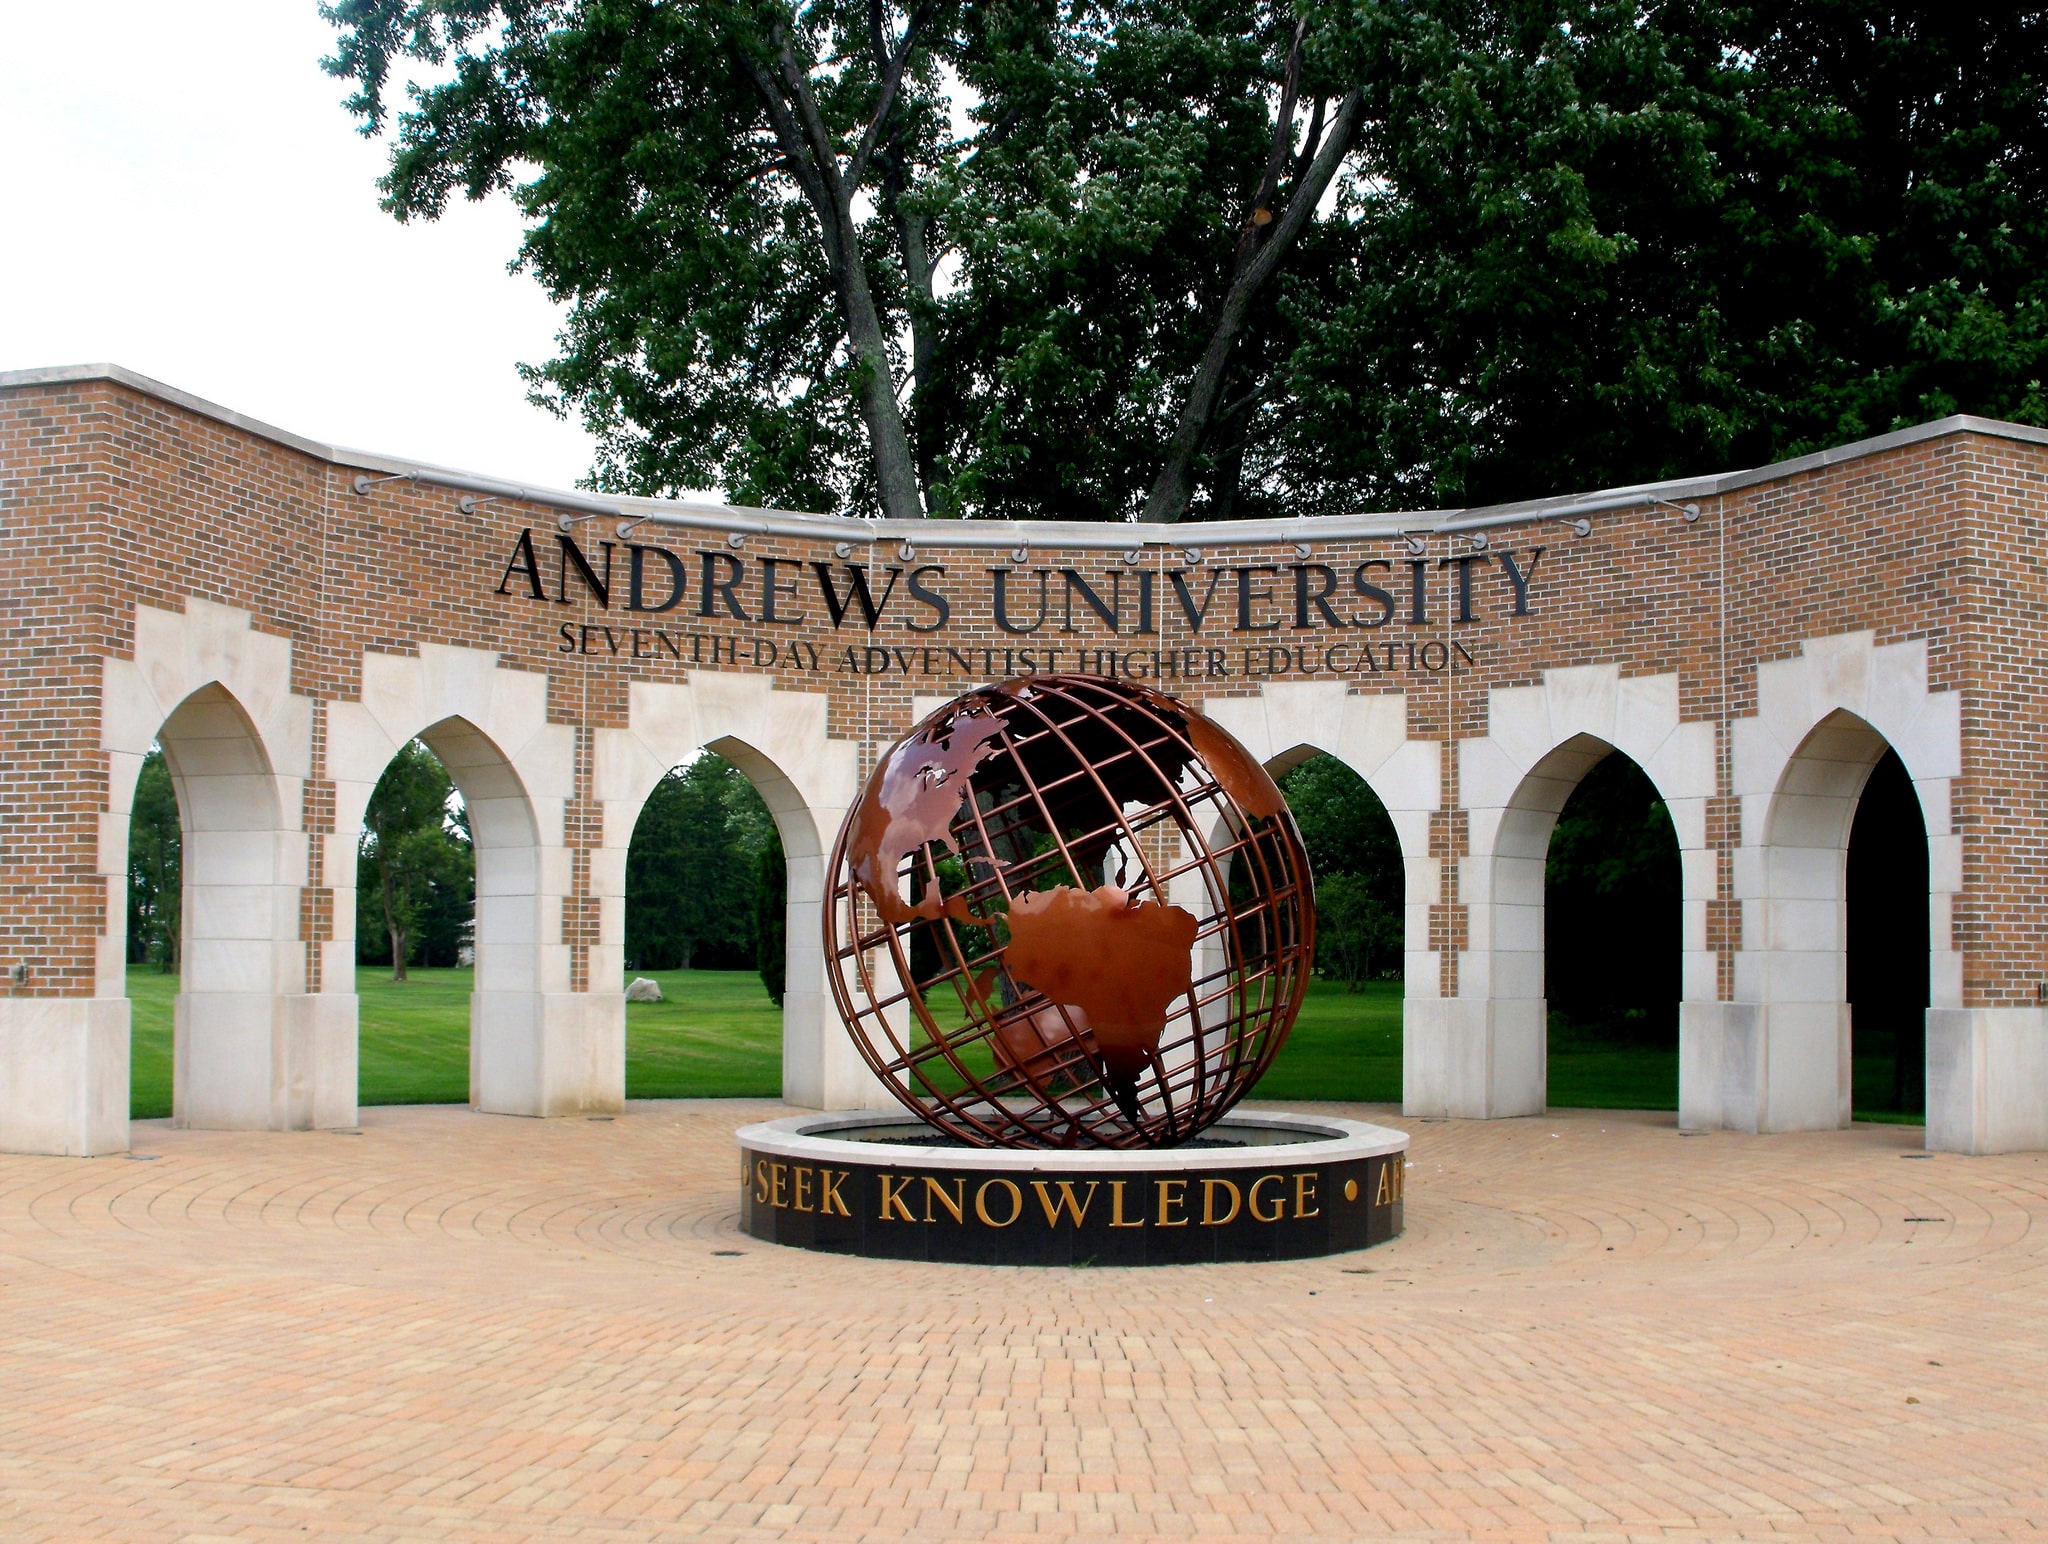 Andrews University in Berrien Springs, Michigan